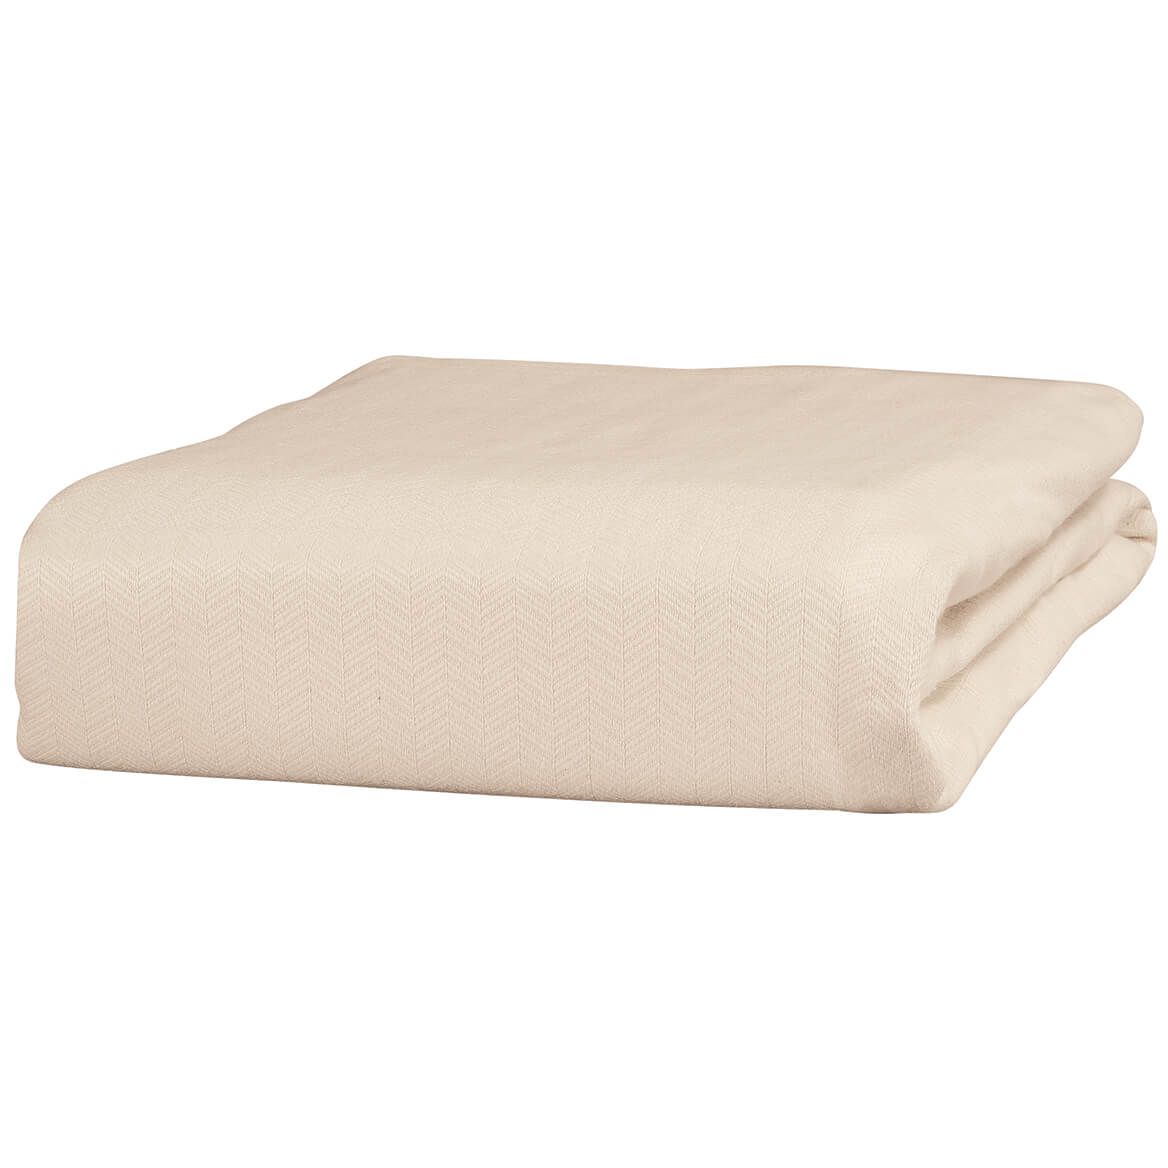 Woven Extra-Soft Cotton Blanket by OakRidge™ + '-' + 364591